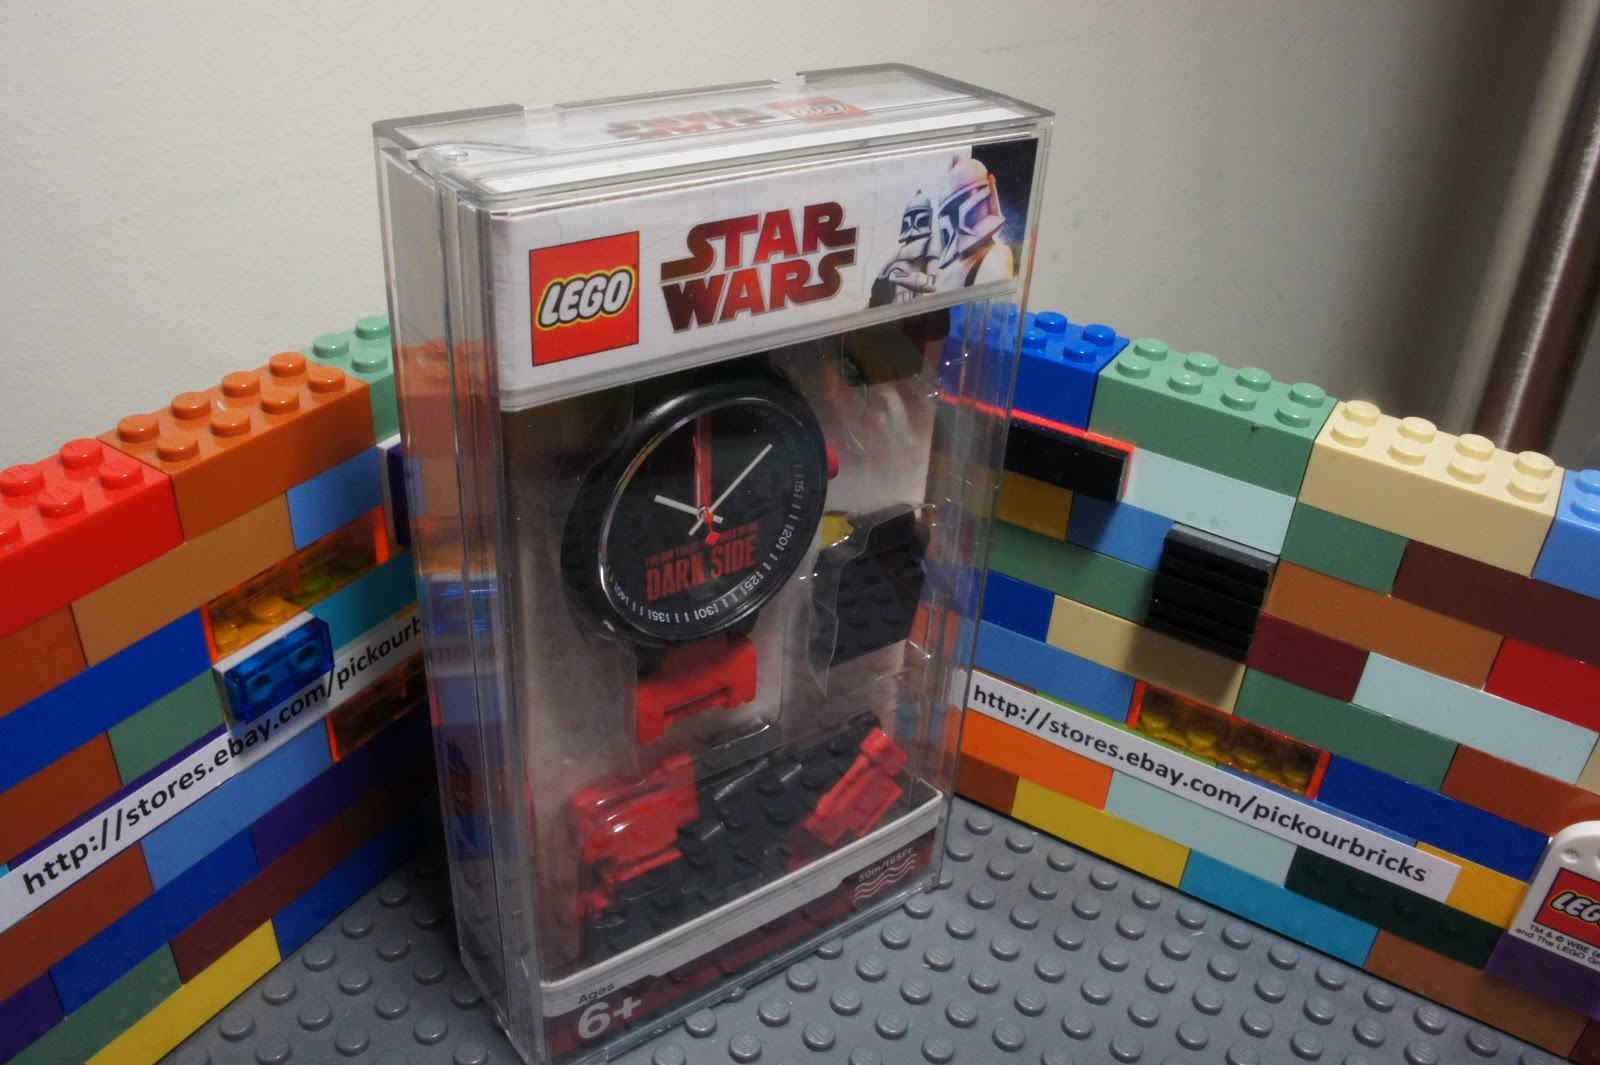 Lego Star Wars Darth Vader Dark Side Watch in Collector's Box Clear Case